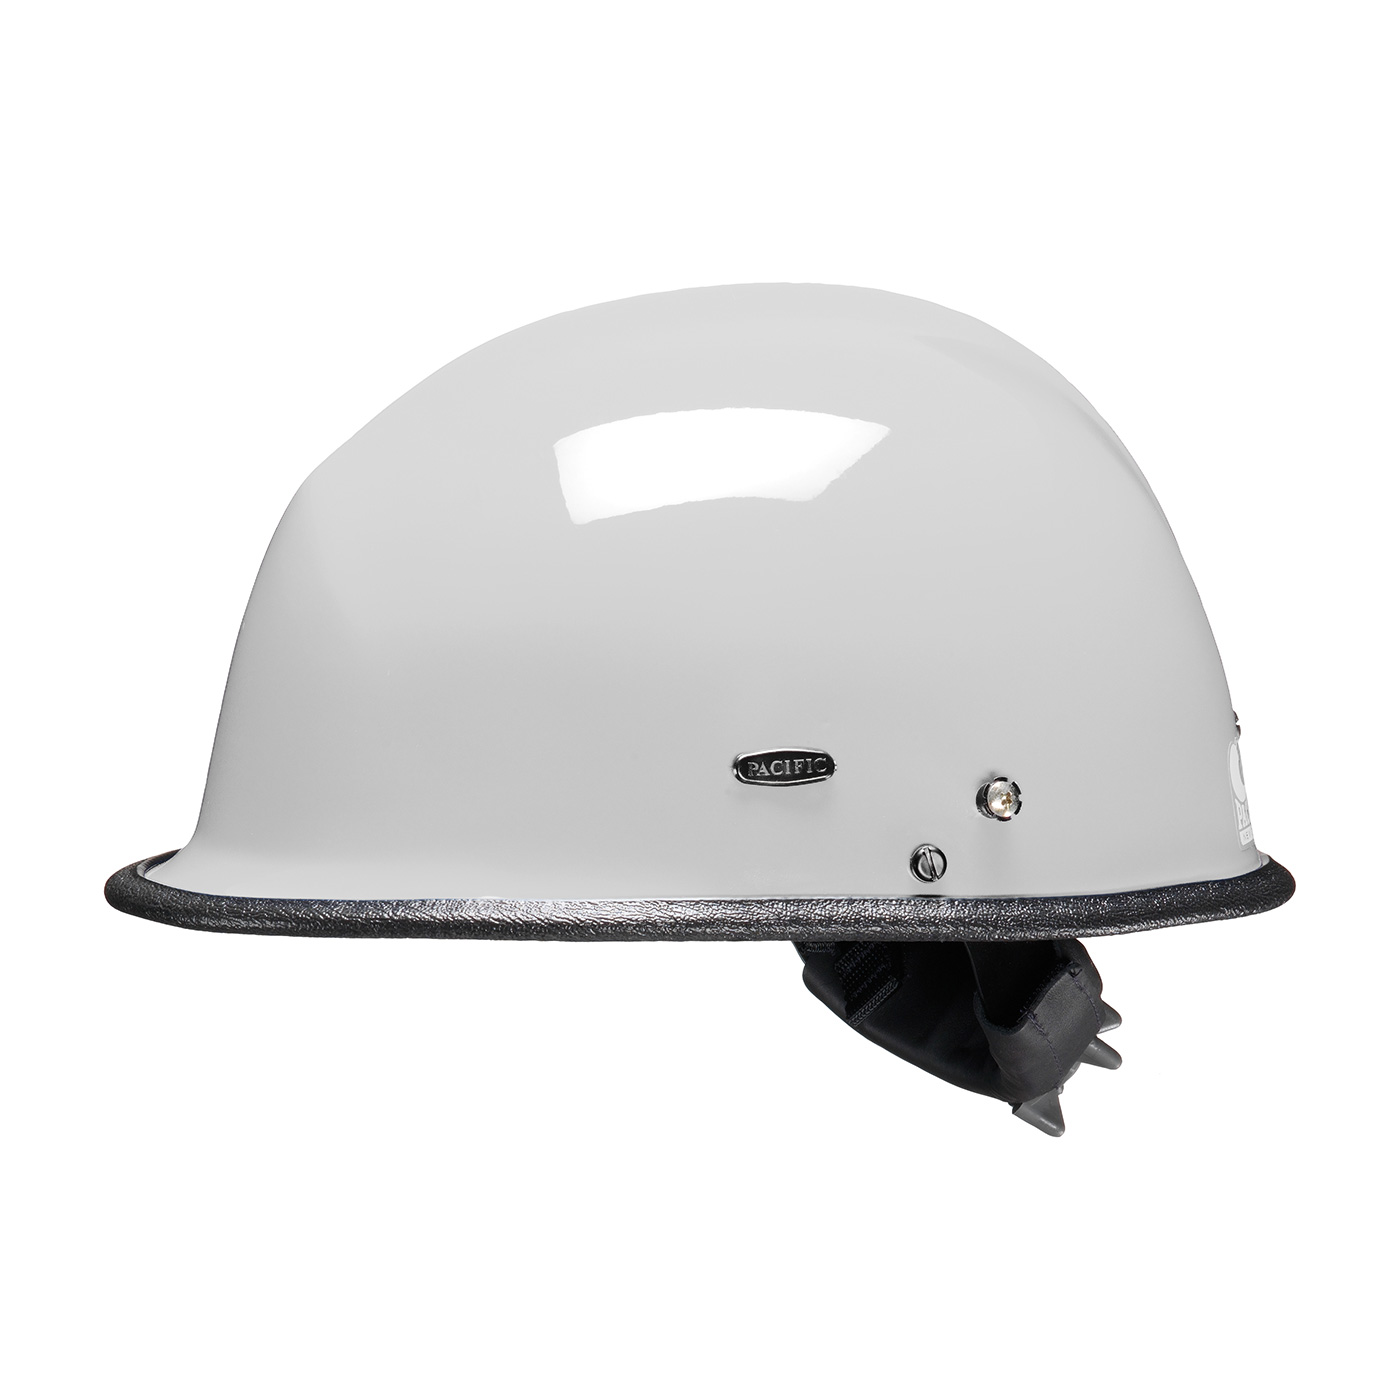 R3 Kiwi Kevlar Shell Rescue Helmet w/ ESS Goggle Mount from Pacific Helmet